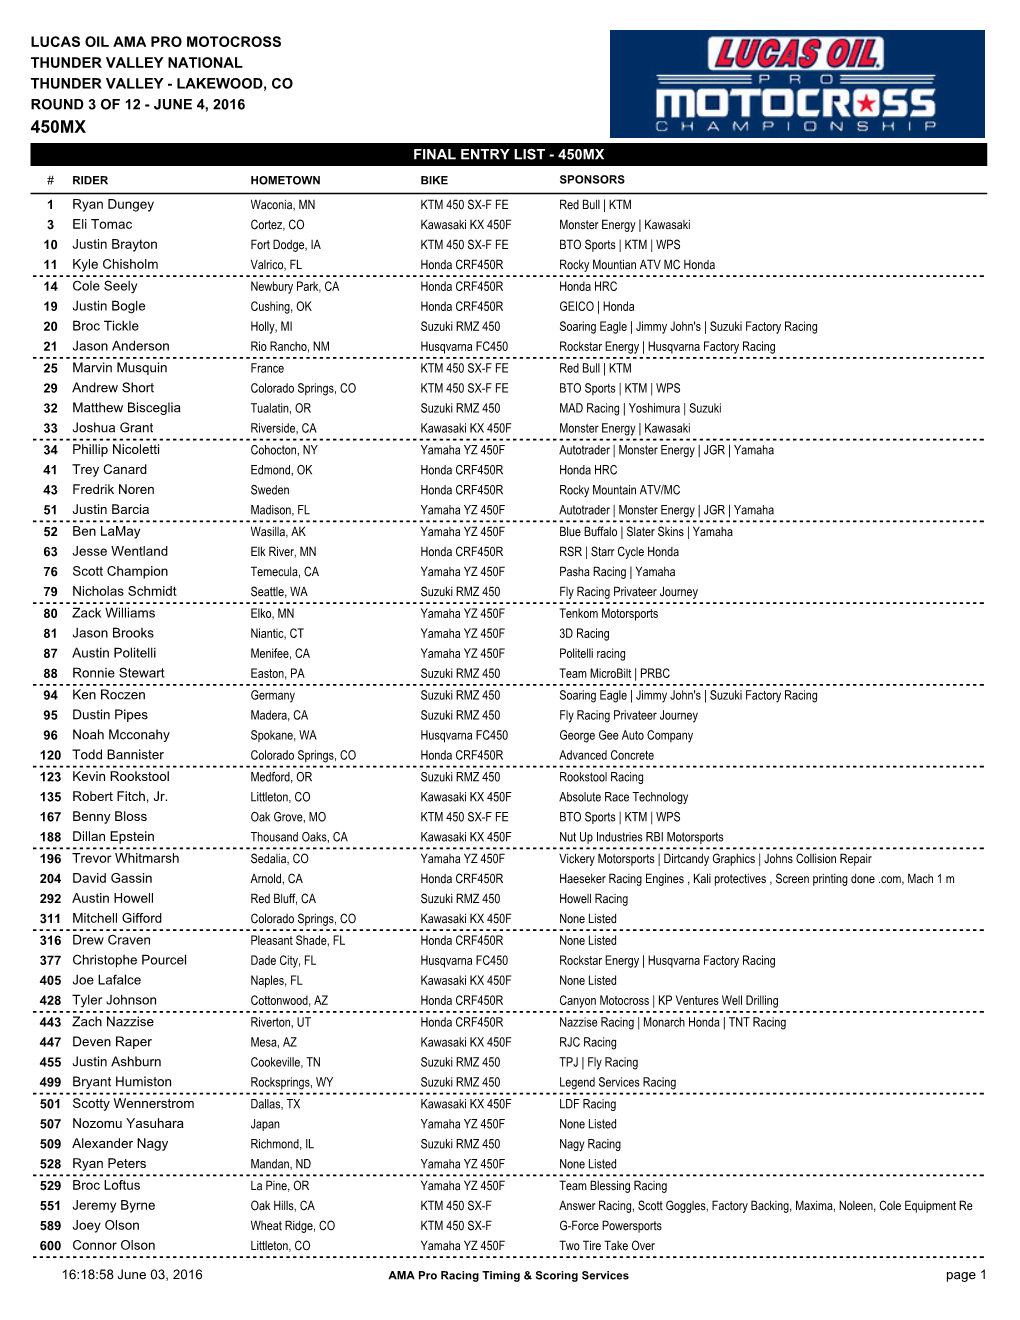 Final Entry List - 450Mx